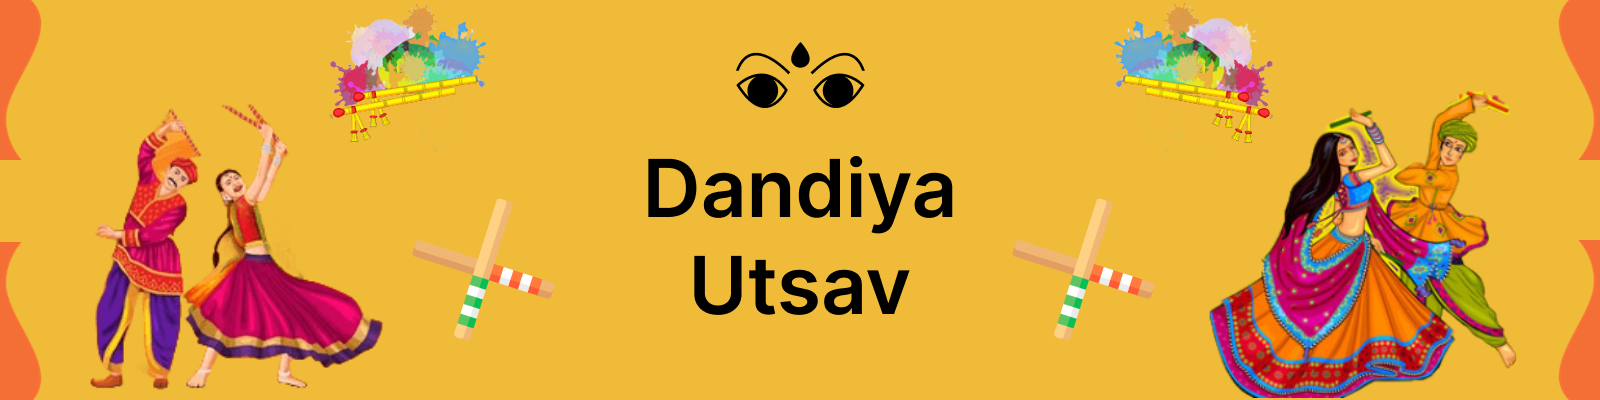 dandiya_u